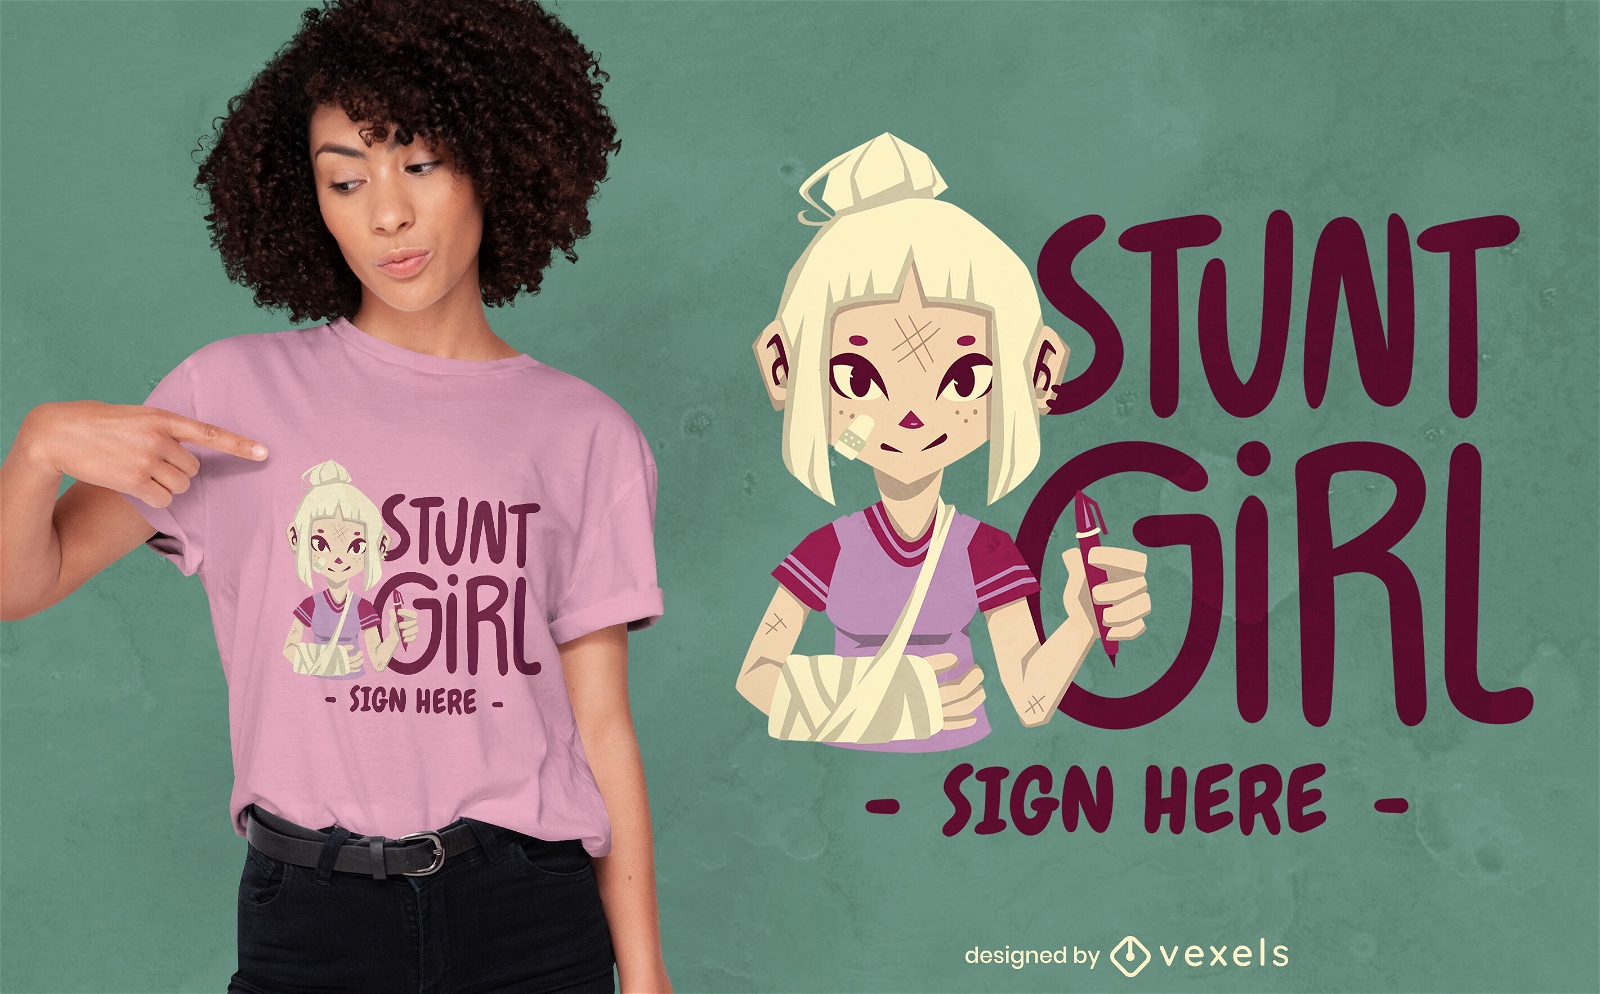 Stunt girl quote t-shirt design